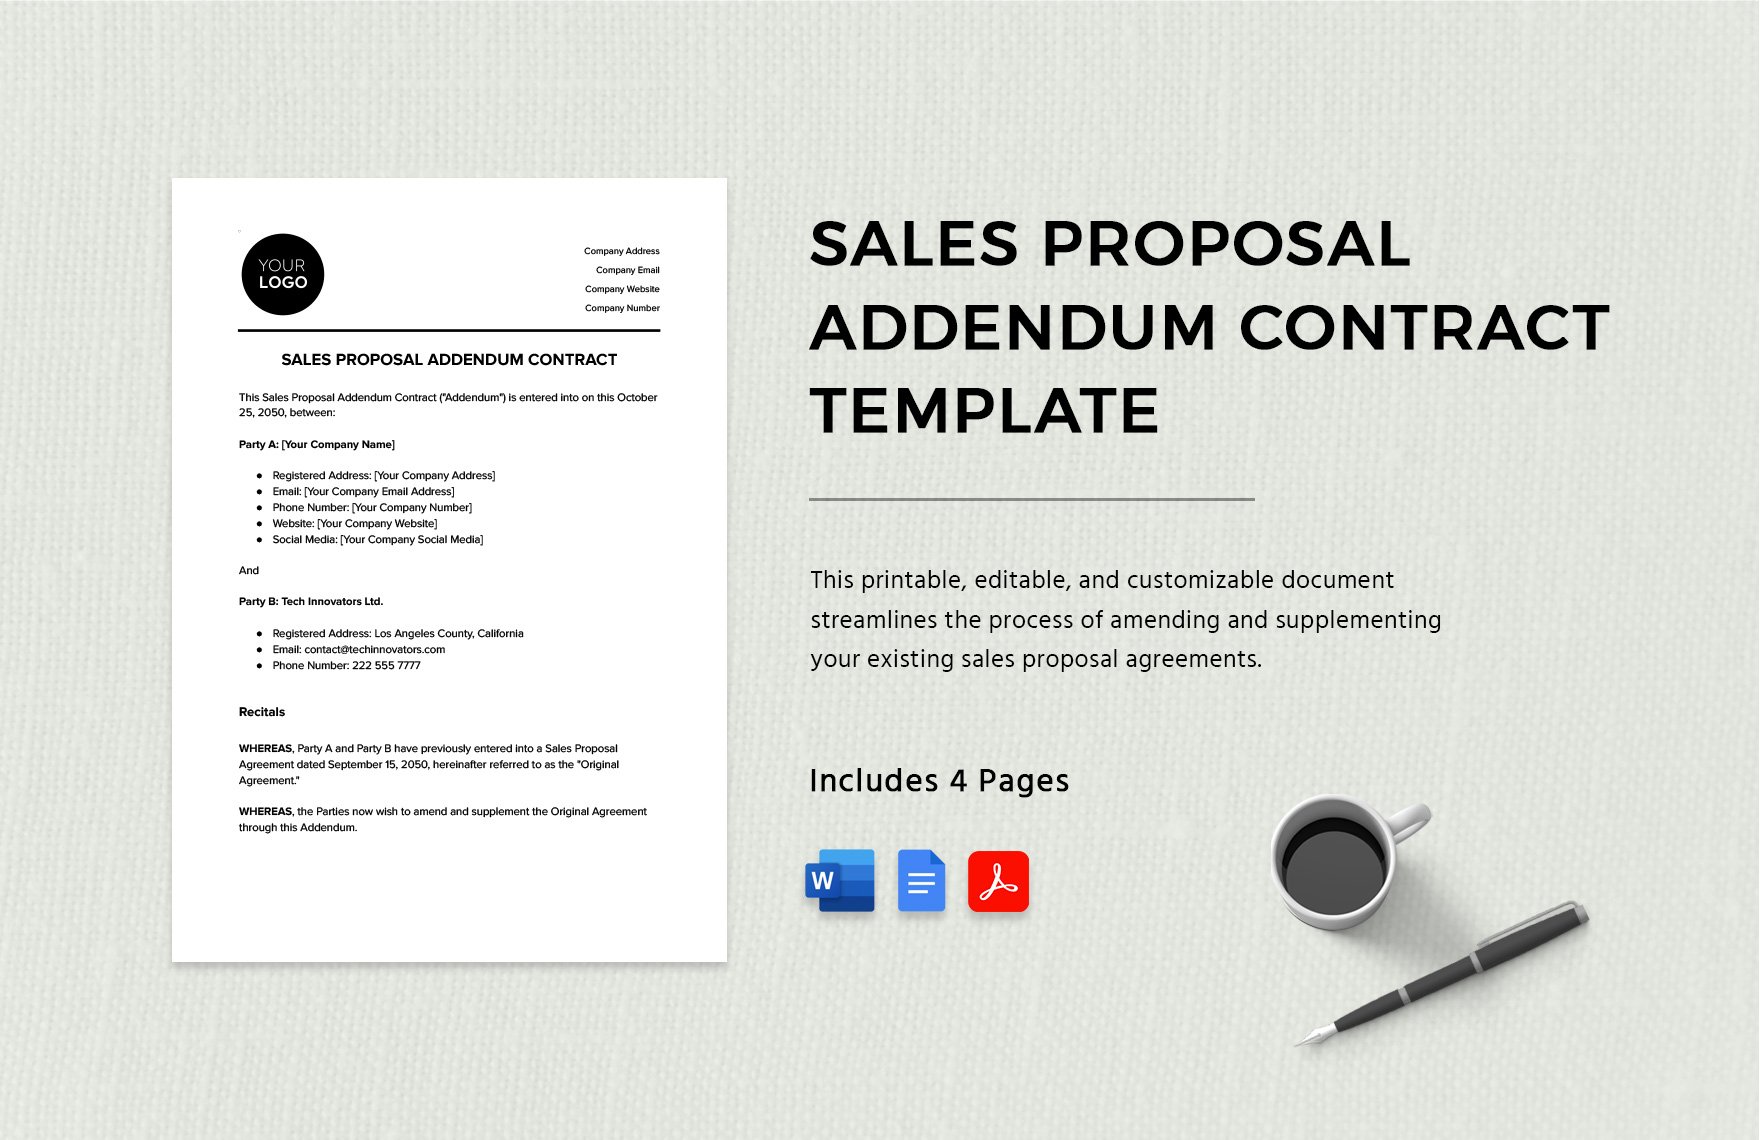  Sales Proposal Addendum Contract Template